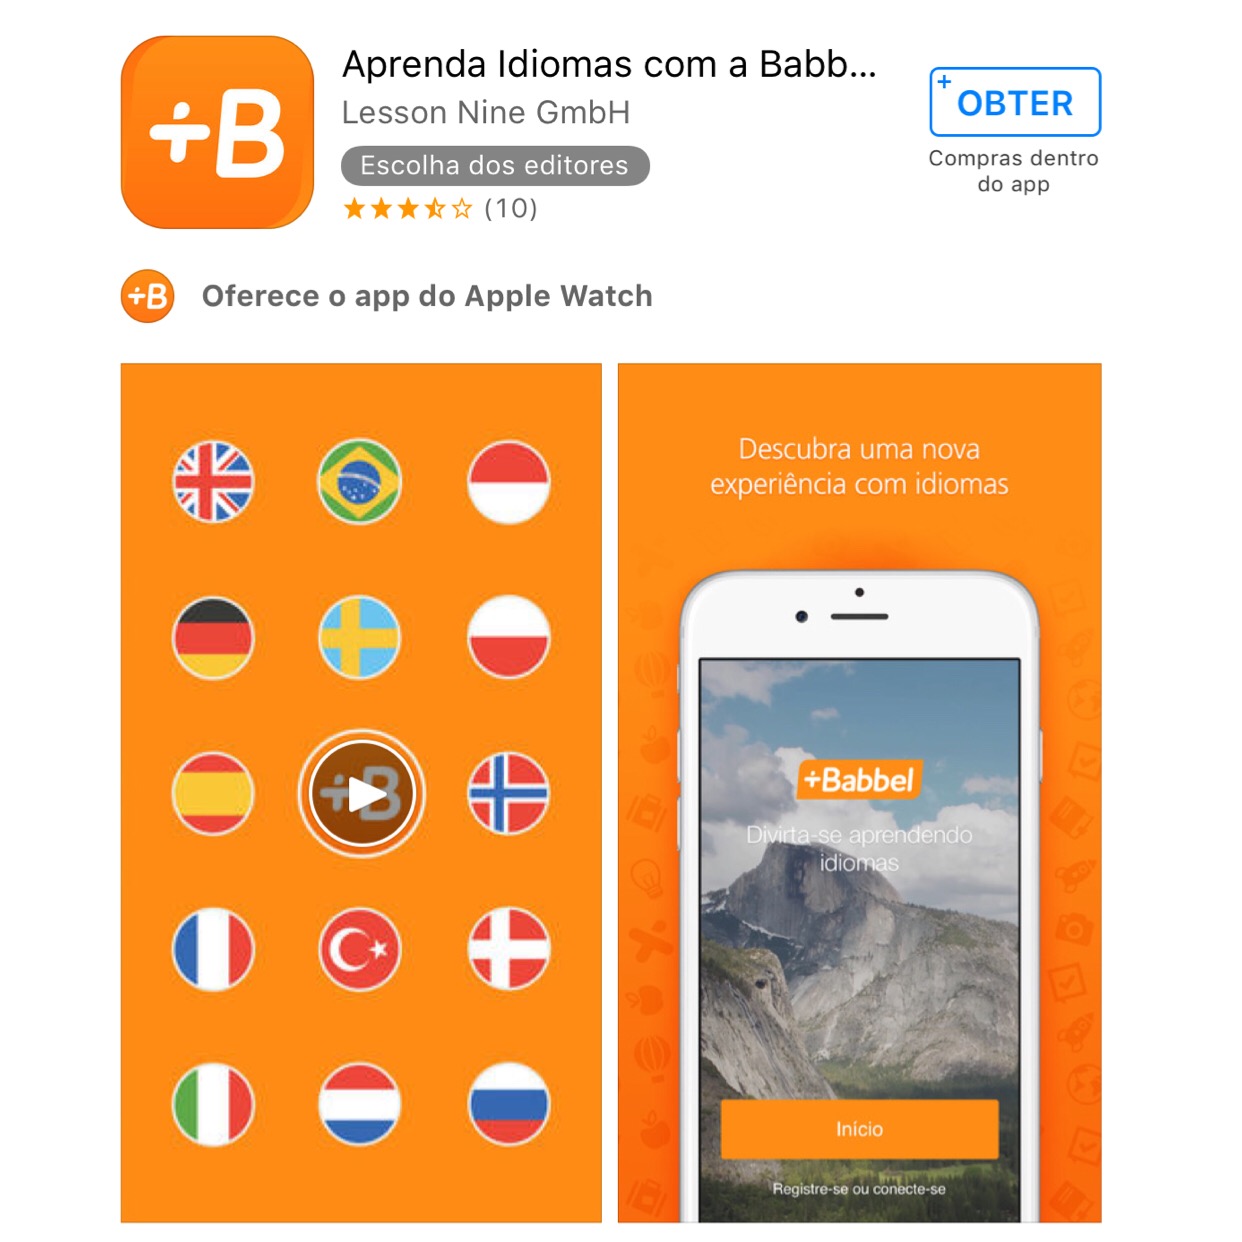 +babbel - aplicativos, programas e sites gratuitos para aprender língua estrangeira sem pagar nada